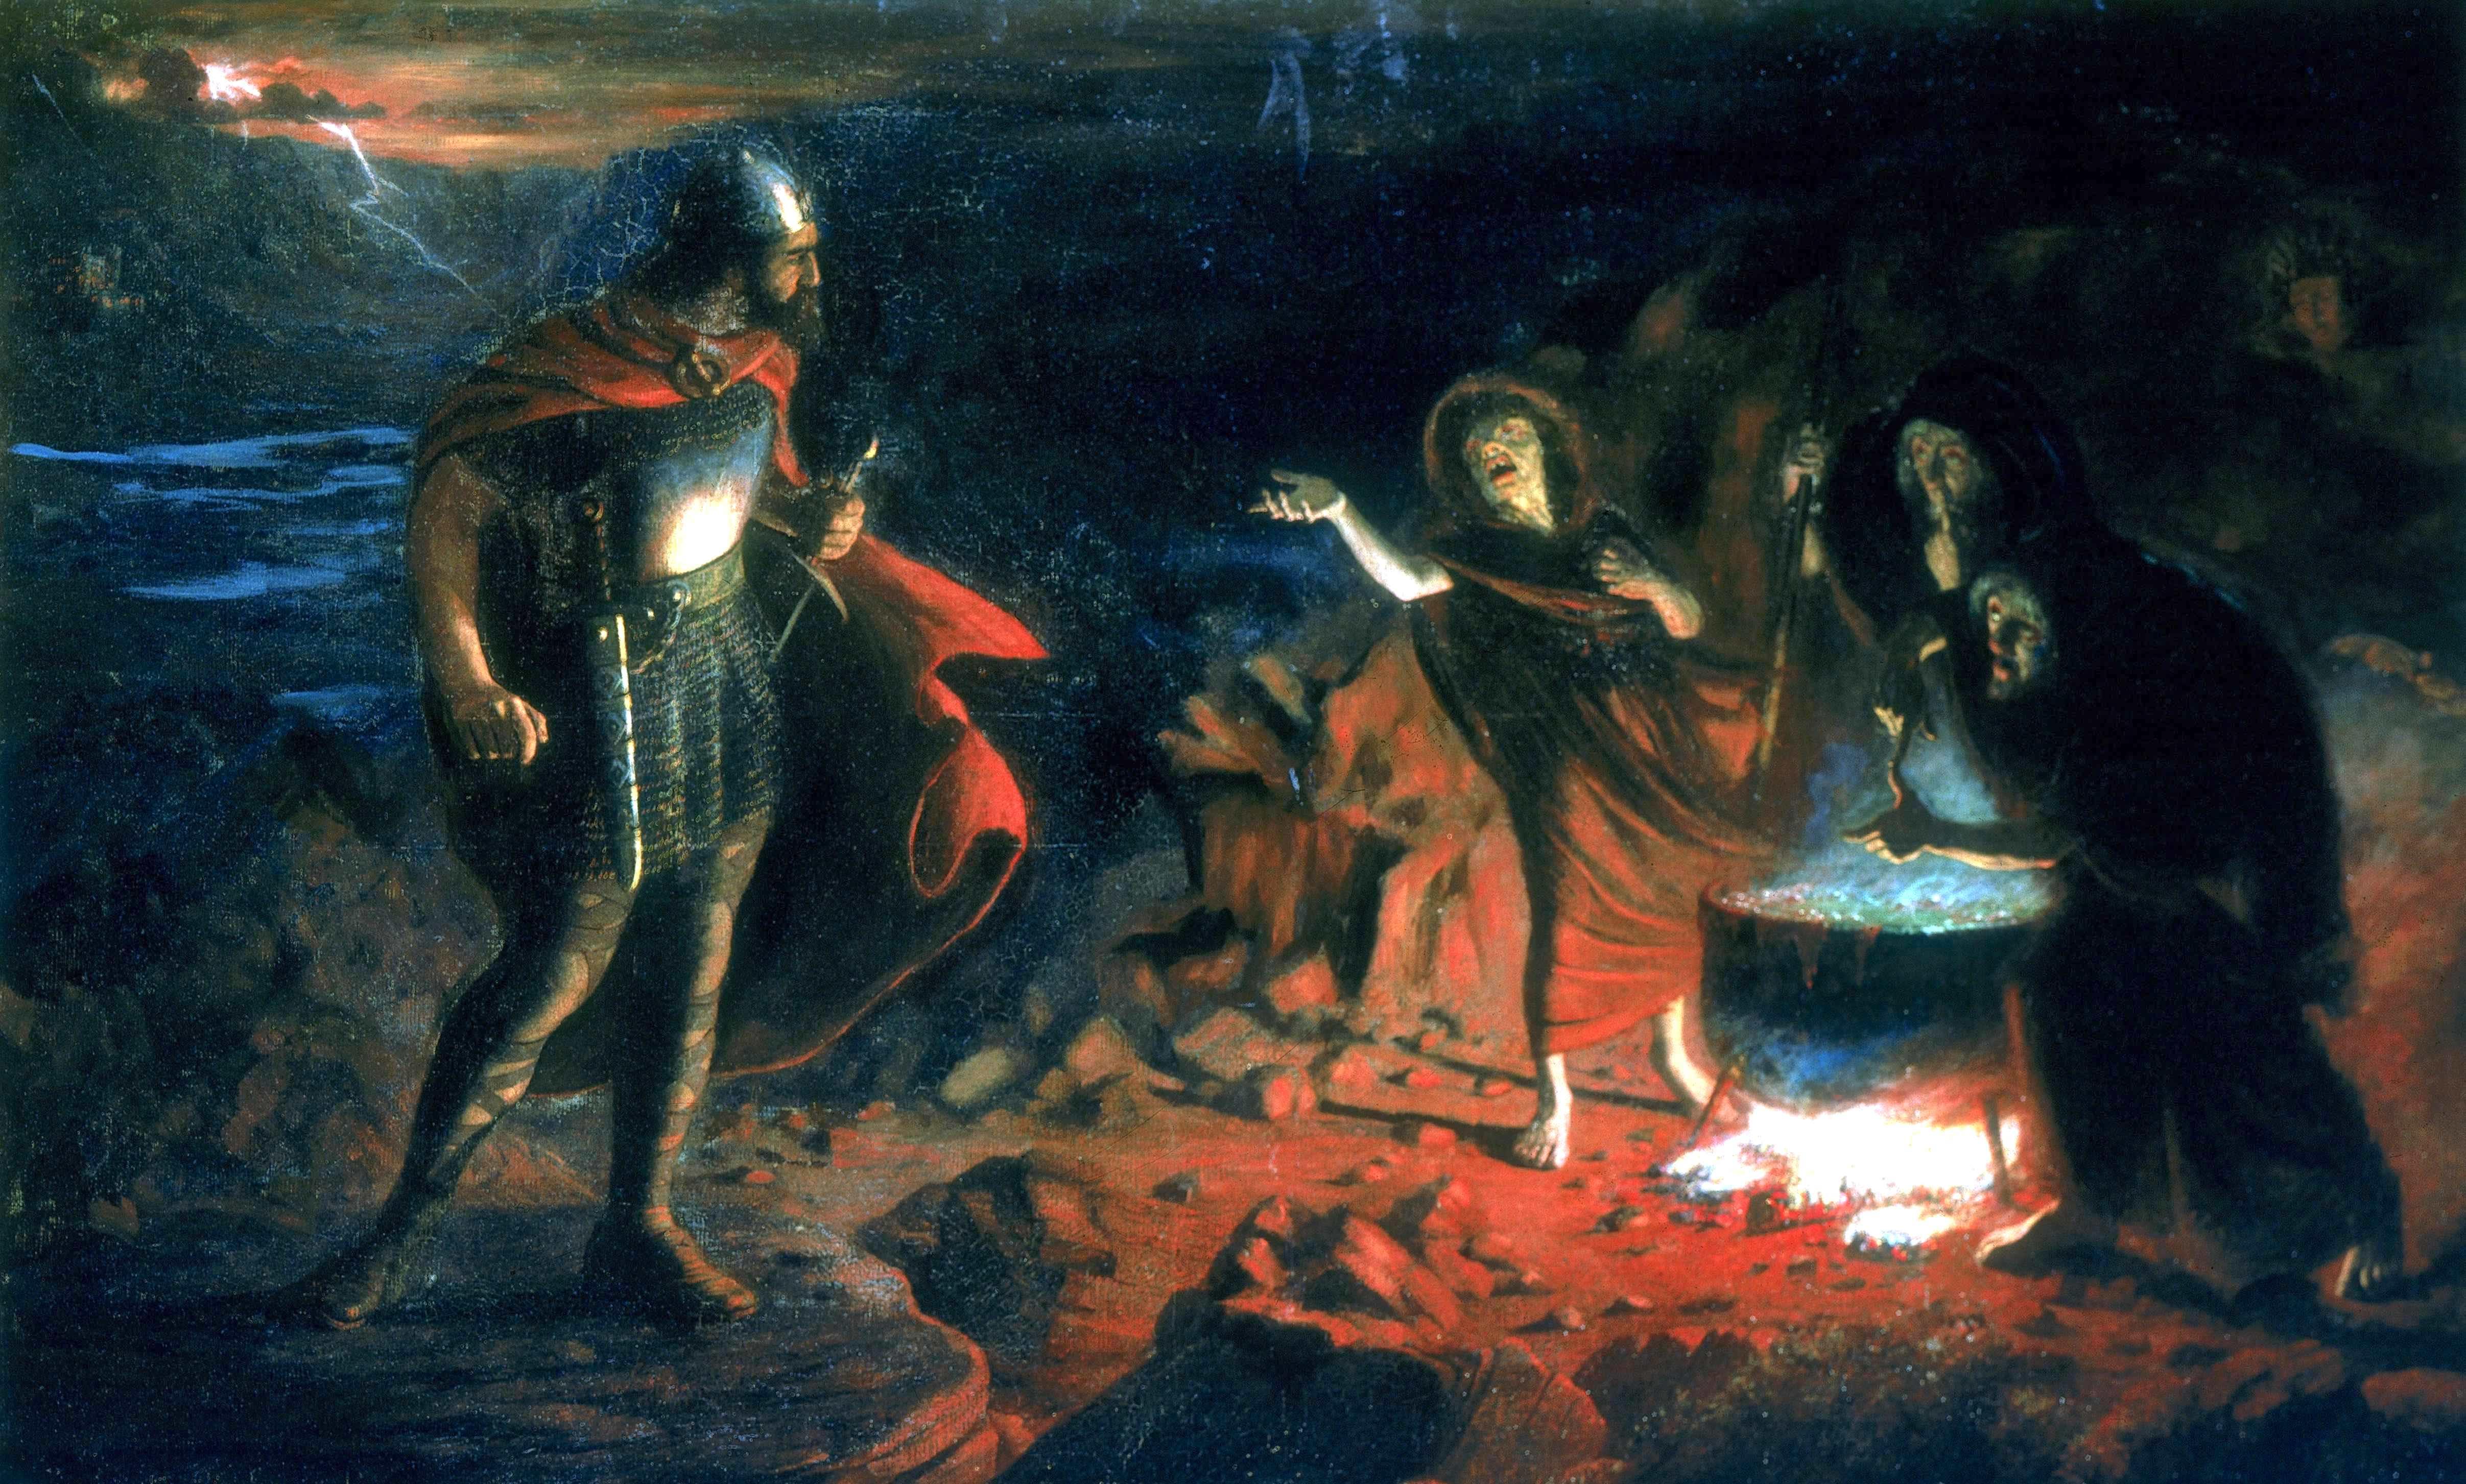 Macbeth Curse, Superstition, Incidents & Remedy - Video & Lesson  Transcript